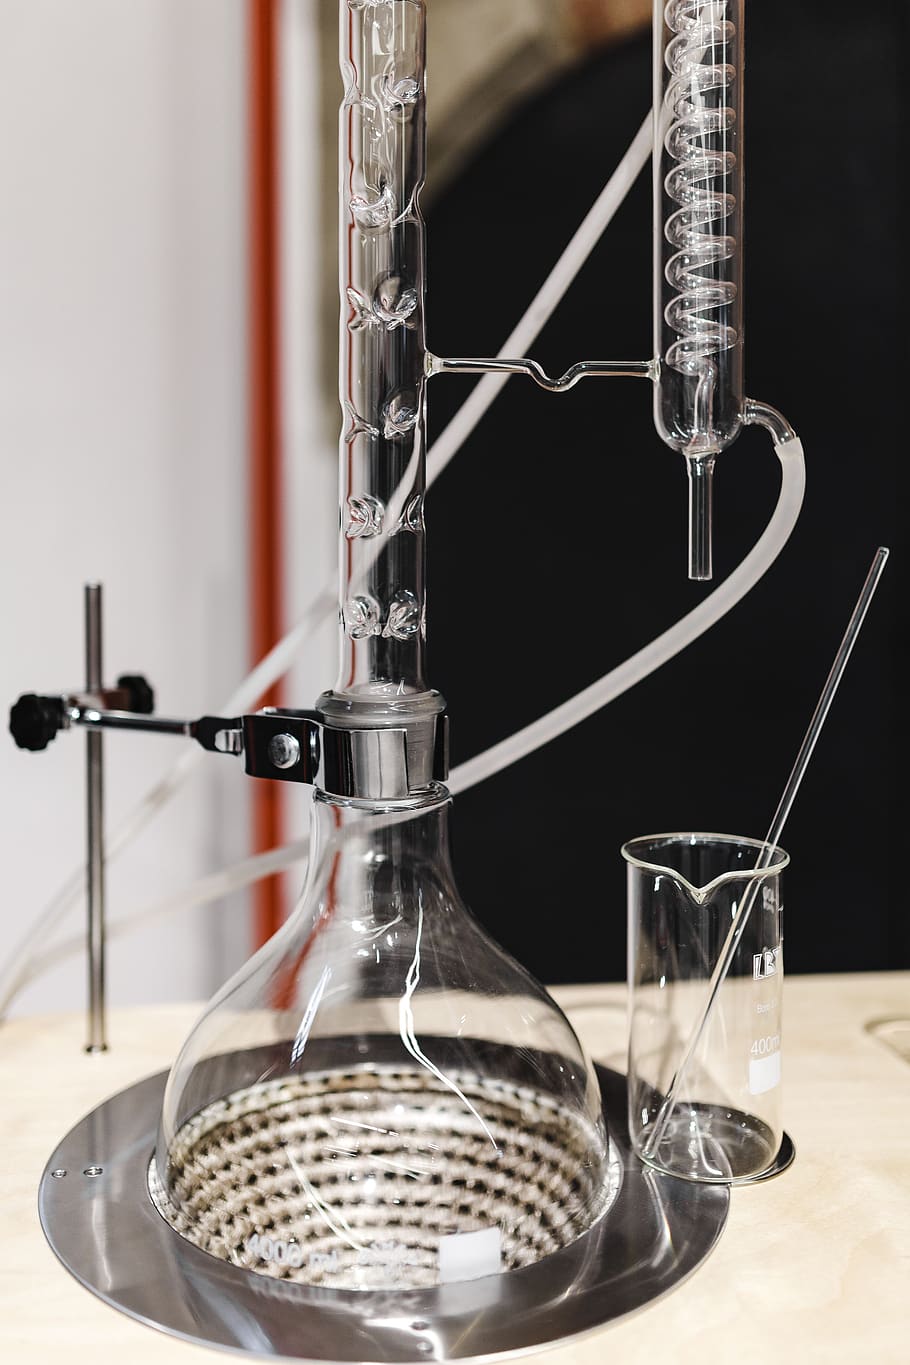 distillation, equipment, experiment, chemistry, chemical, reaction, apparatus, science, chemist, mixture